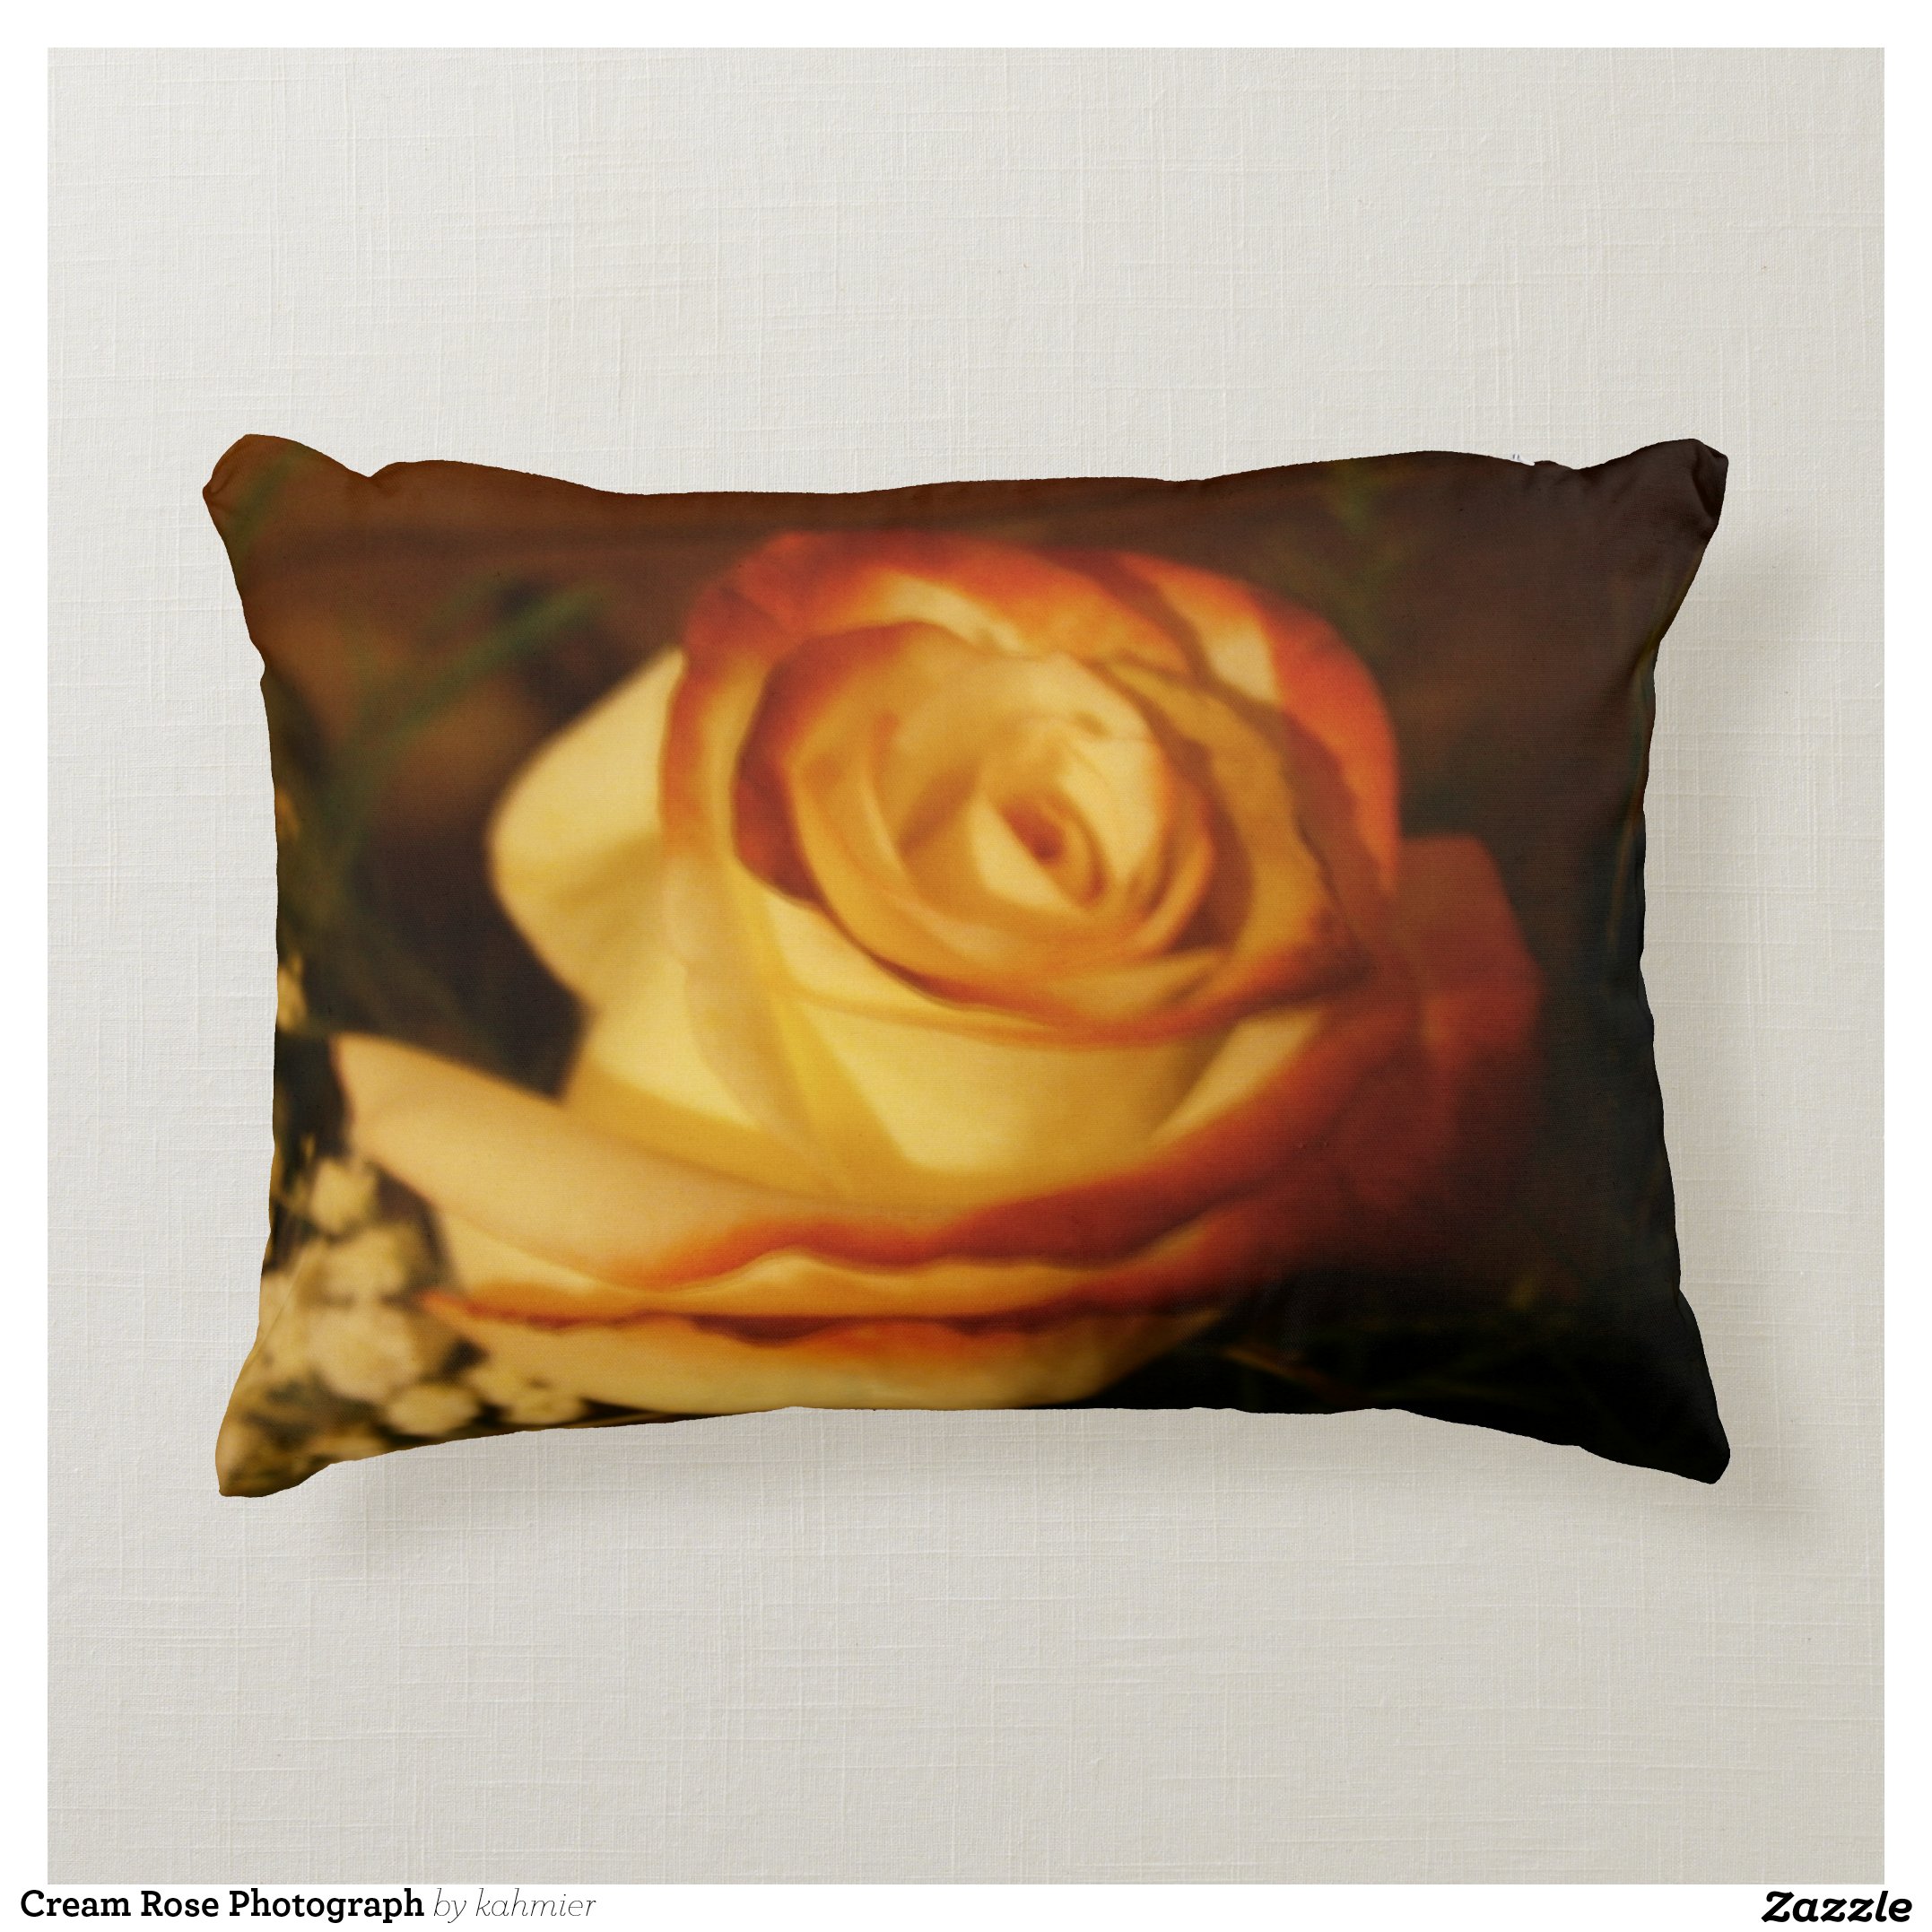 Cream Rose Photograph Accent Pillow